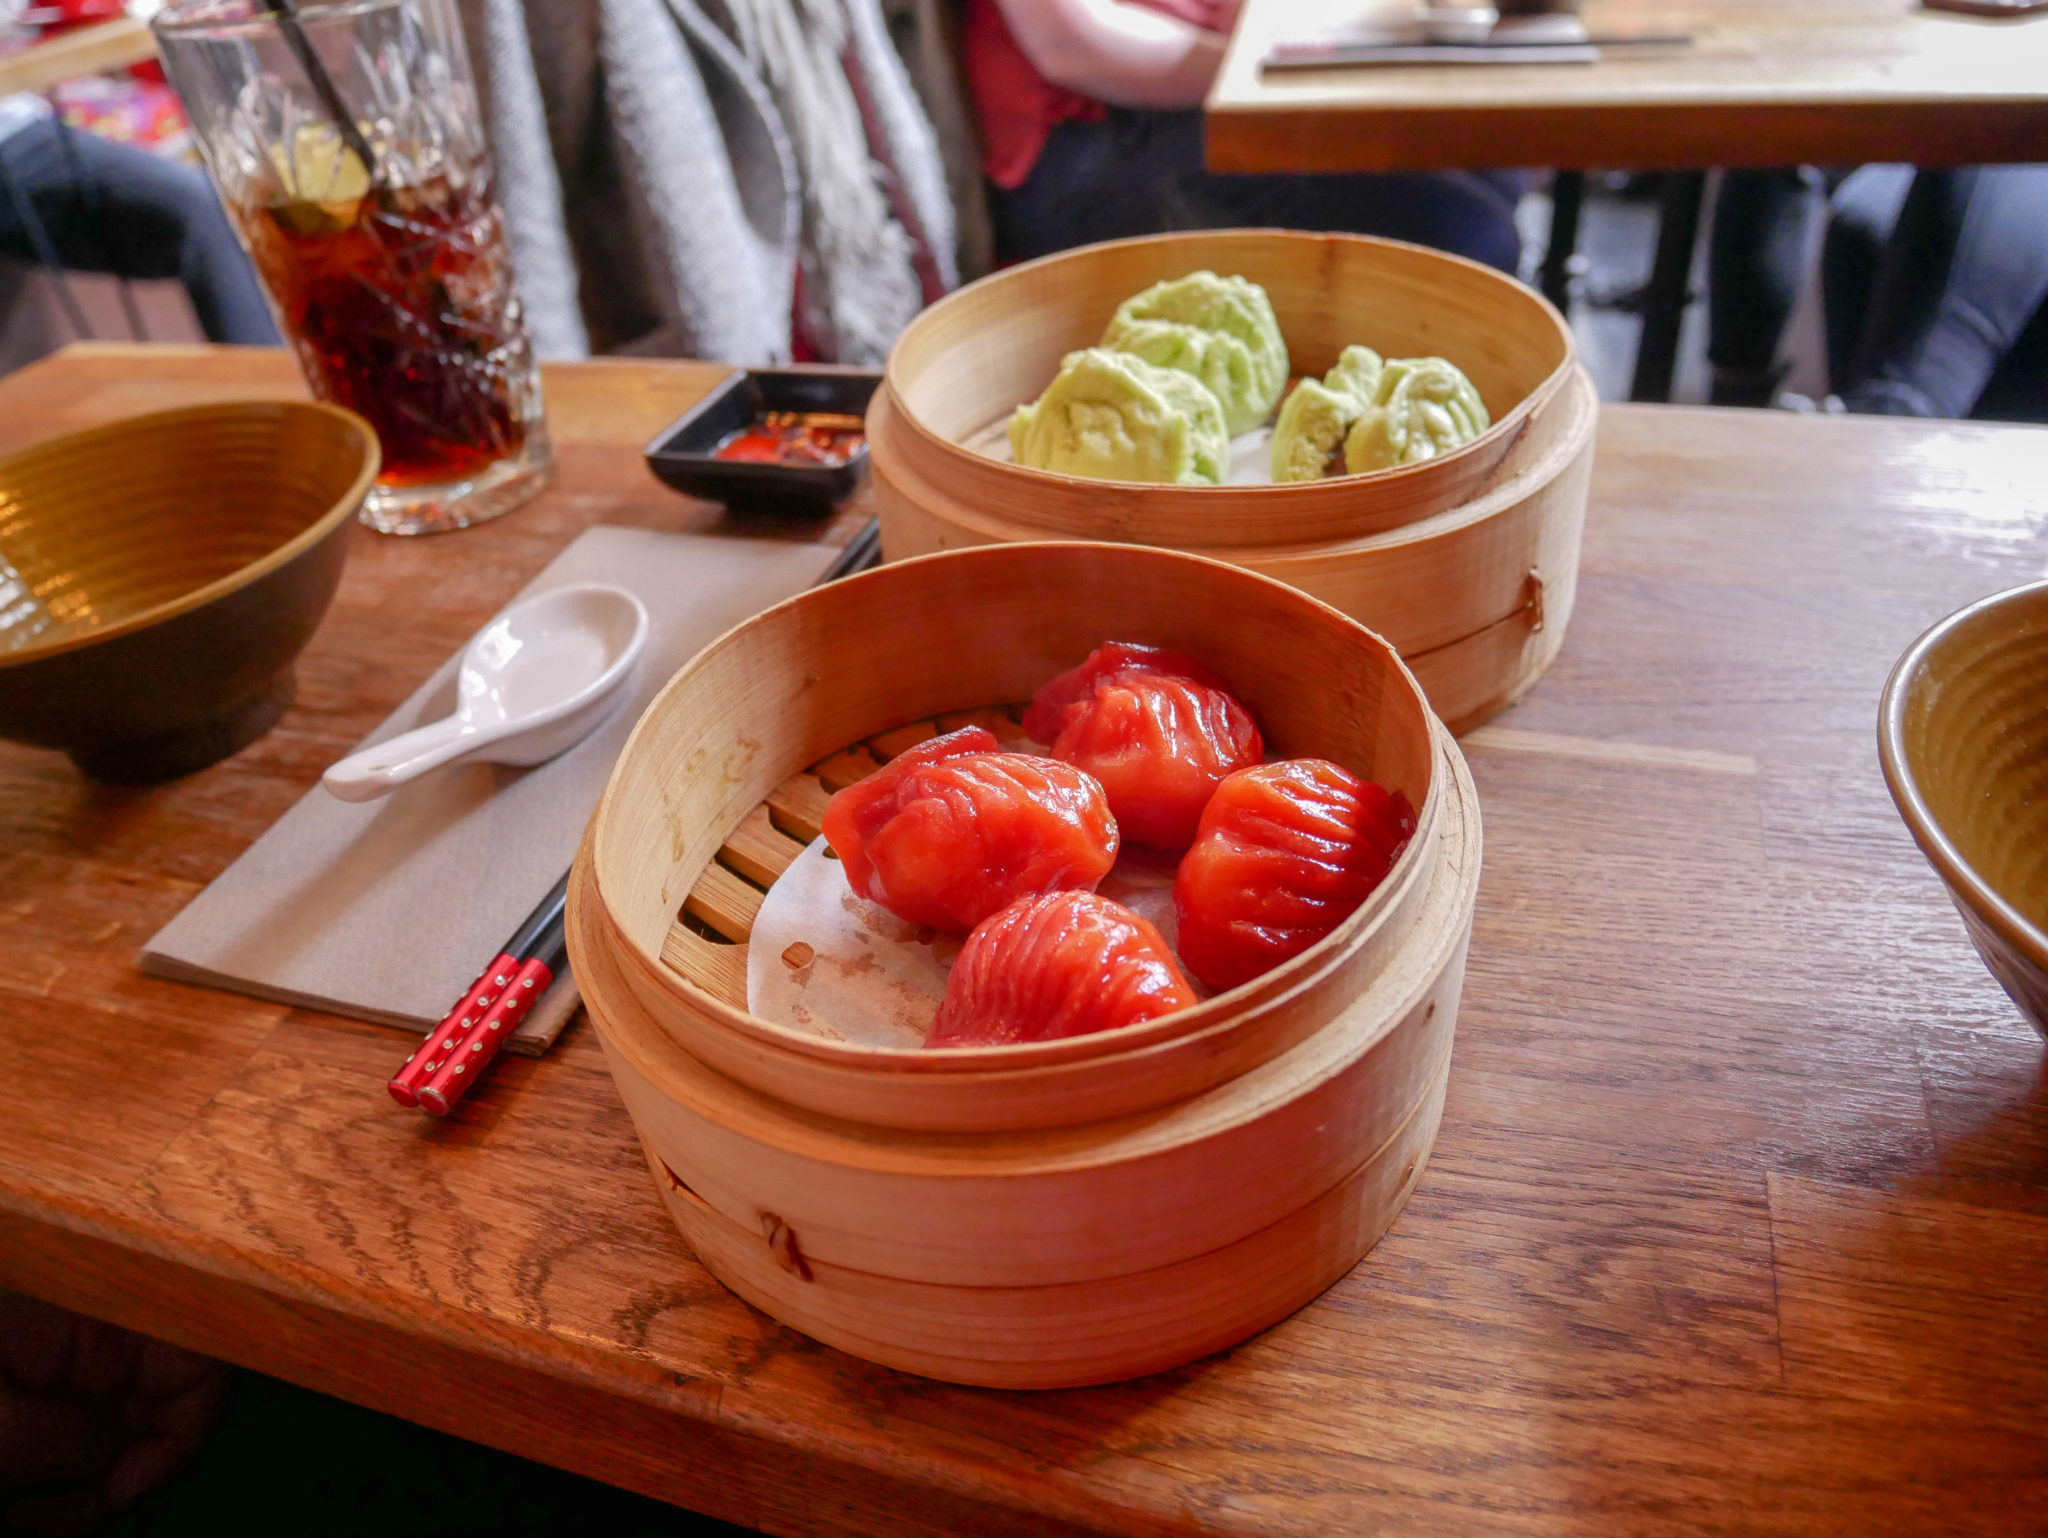 4 "ruby prawn dumplings" and 3 pork buns in wooden baskets at BoaziInn restaurant, Soho, London